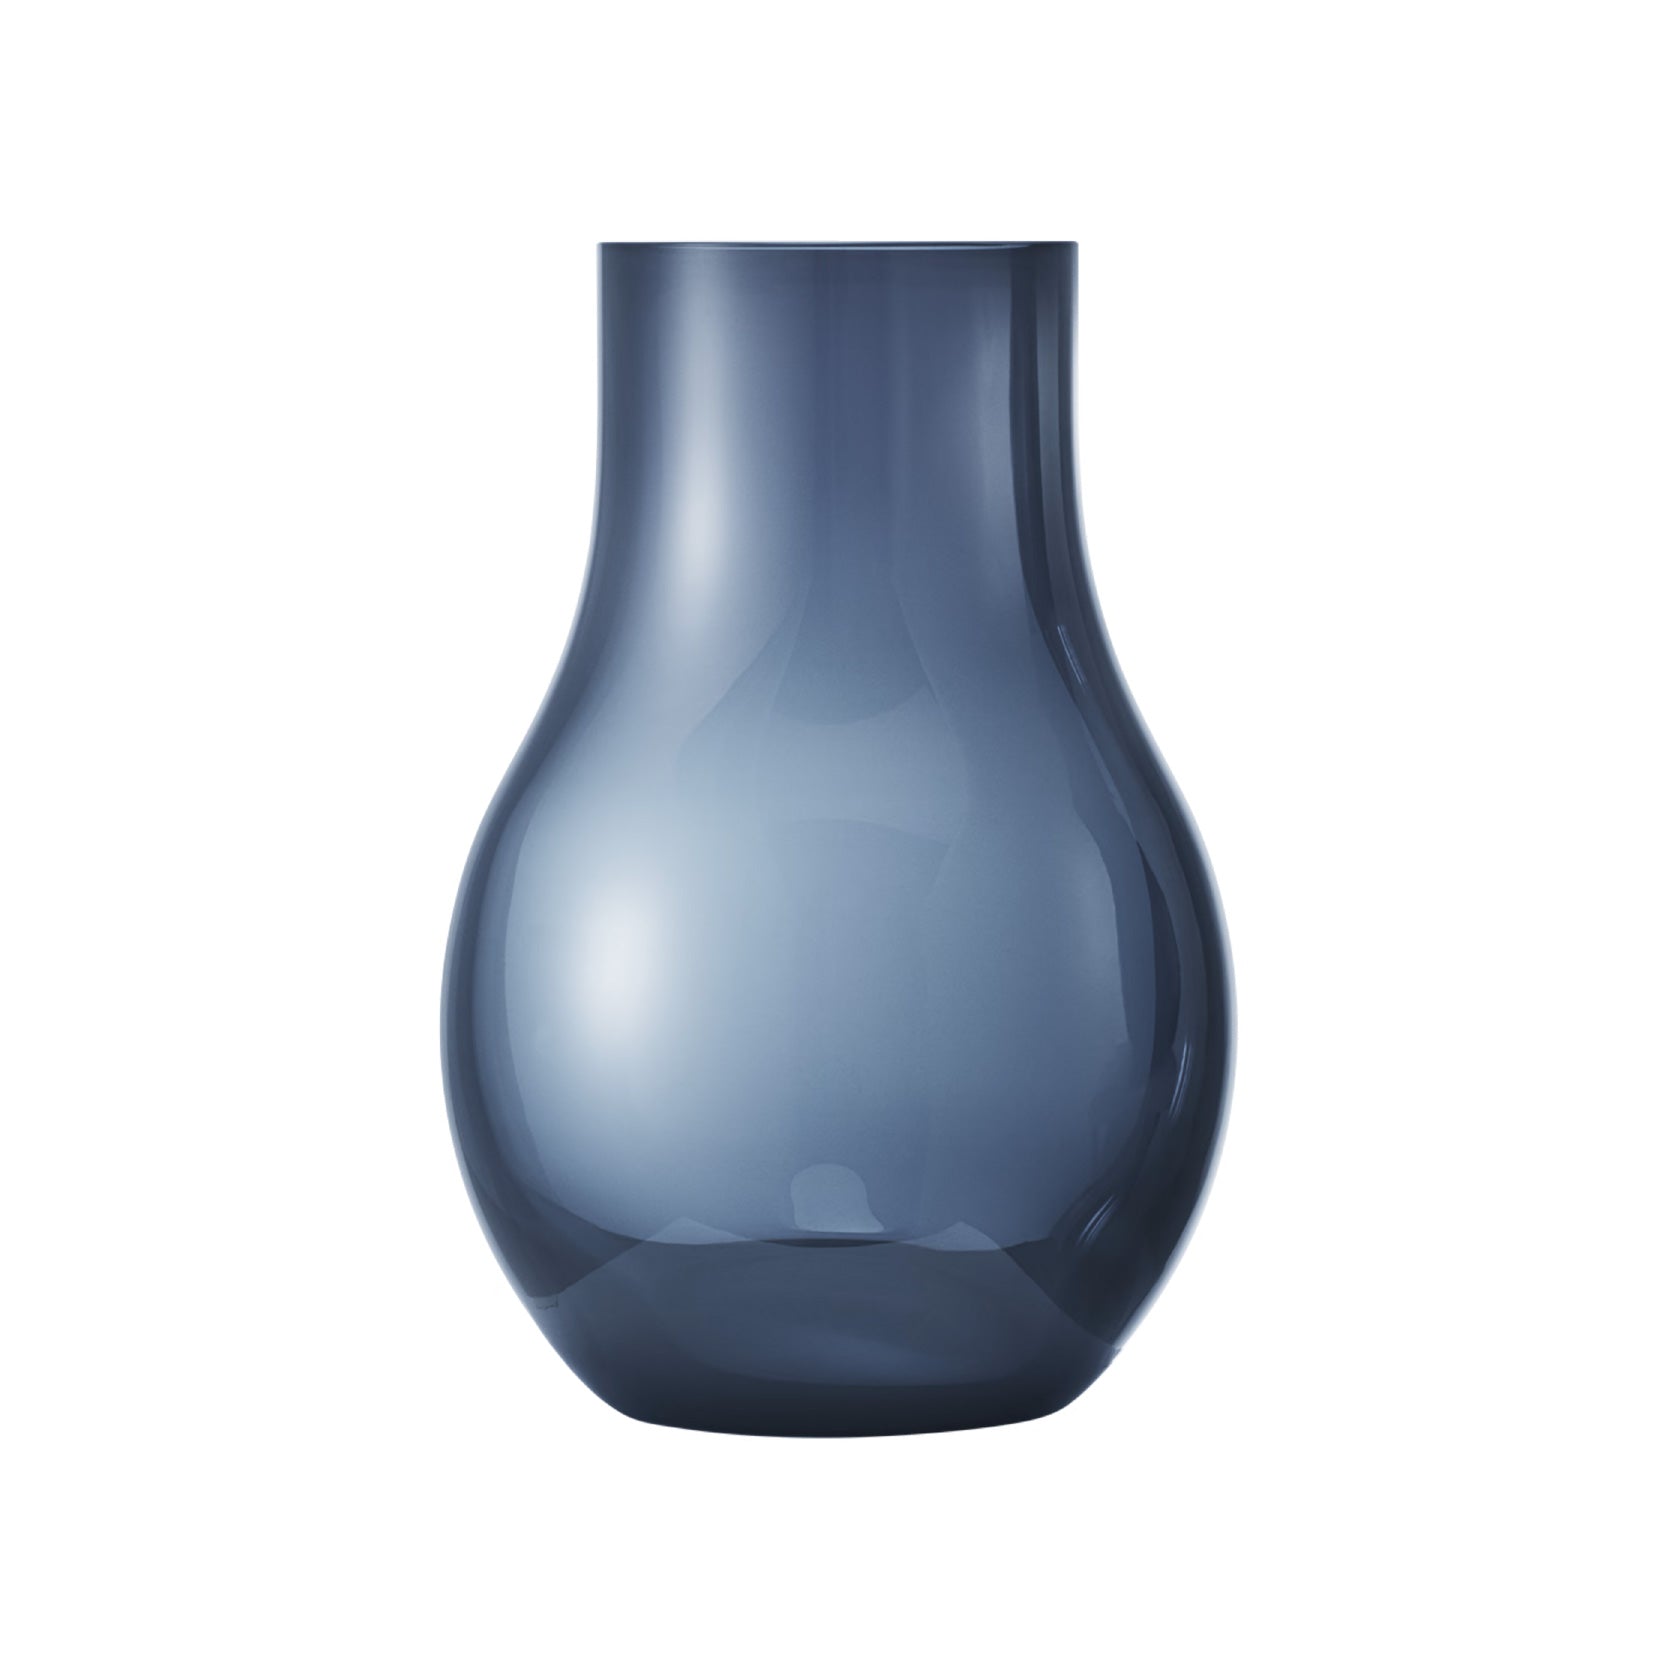 Georg Jensen Cafu Glass Vase Small